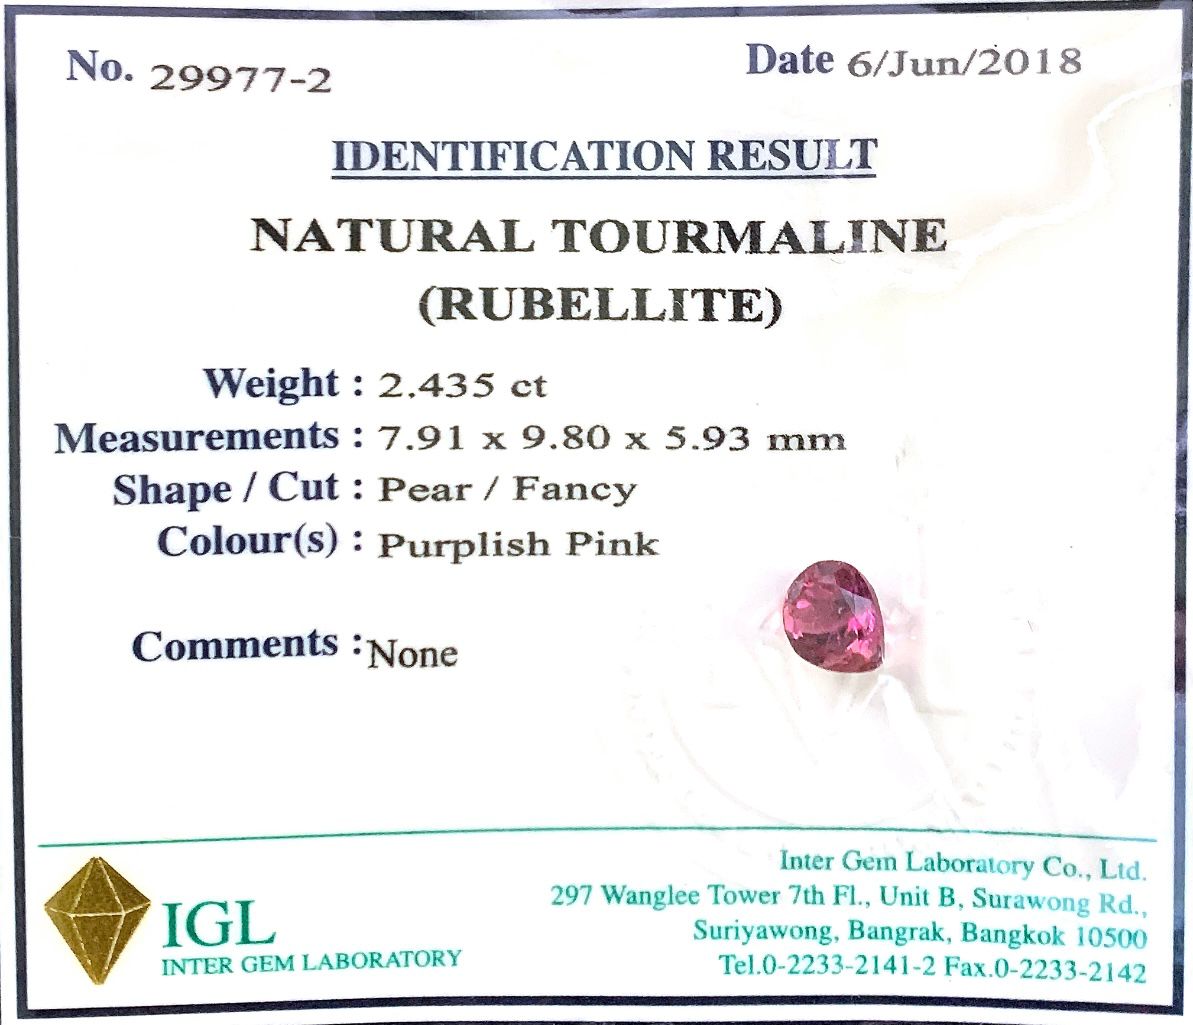 Natural .Tourmaline (Rubellite) ID : 29977-2